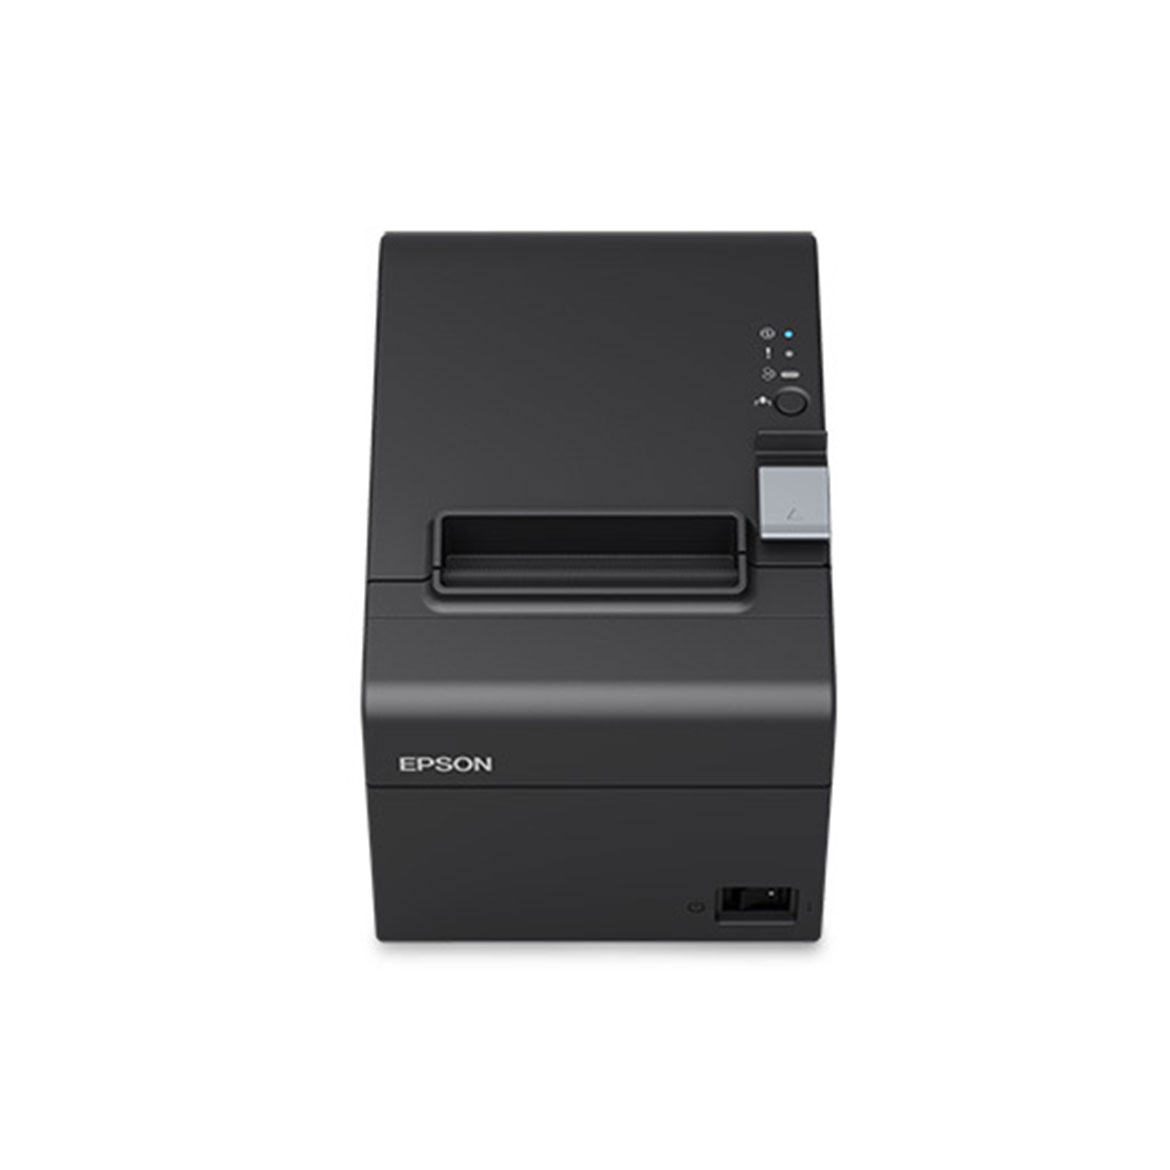 Epson Tm-T20III Thermal receipt printer front